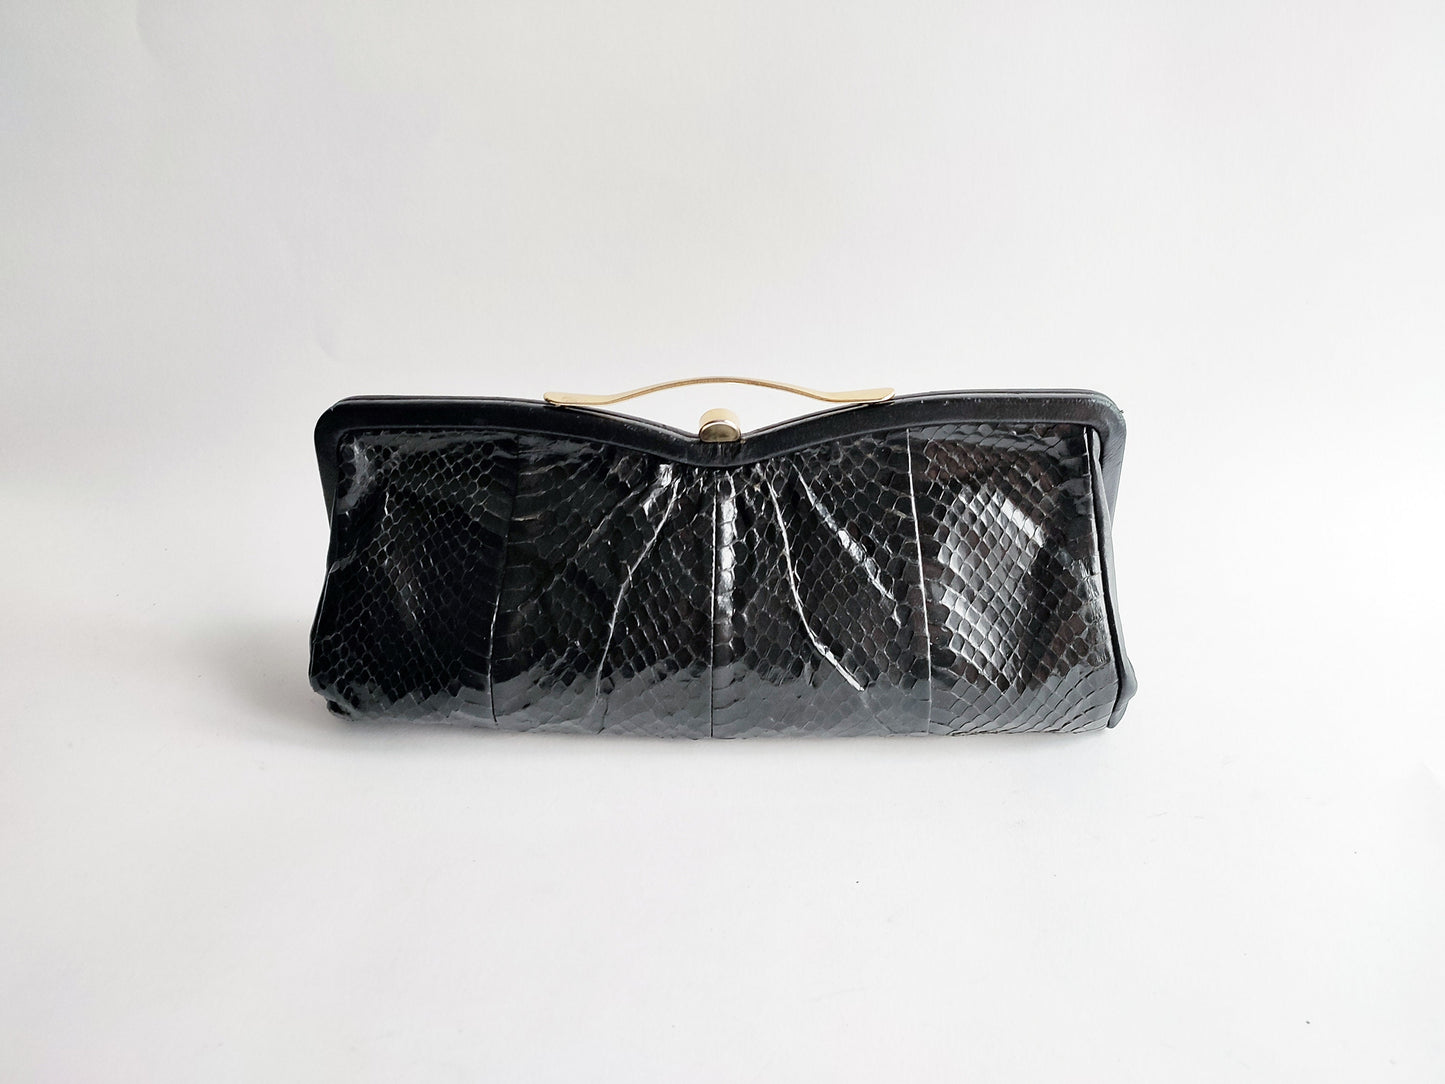 Black leather Clutch Baguette bag by Jane Shilton Boho style - 1970's / 1980's